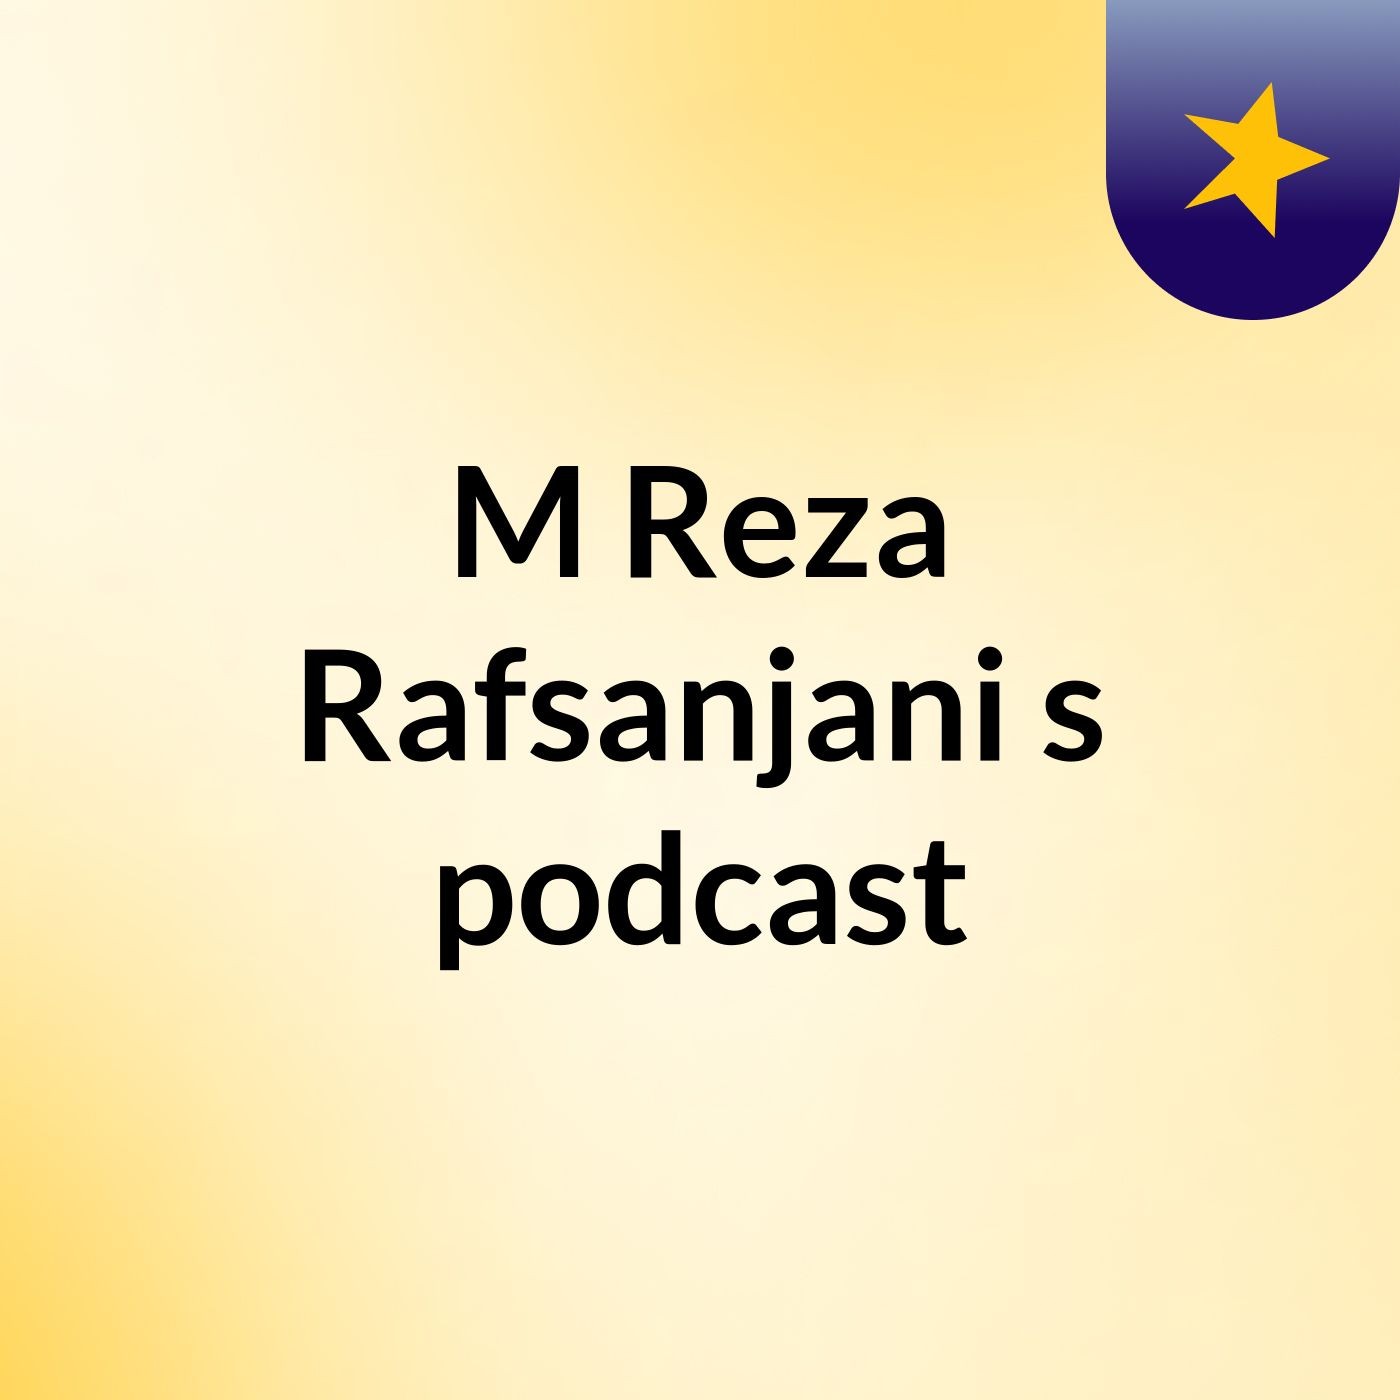 M Reza Rafsanjani's podcast